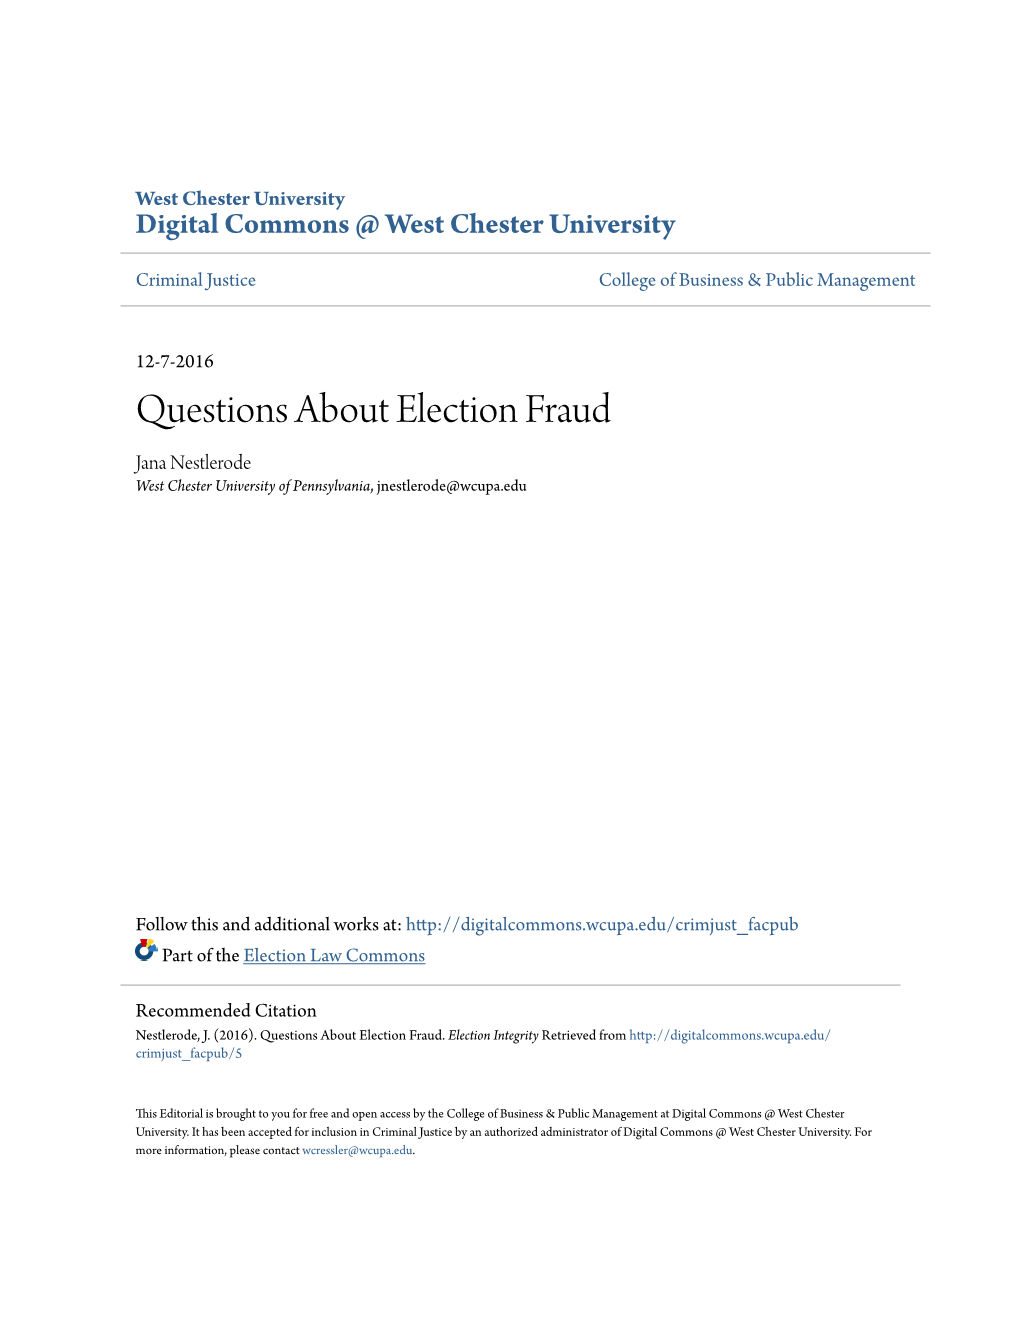 Questions About Election Fraud Jana Nestlerode West Chester University of Pennsylvania, Jnestlerode@Wcupa.Edu